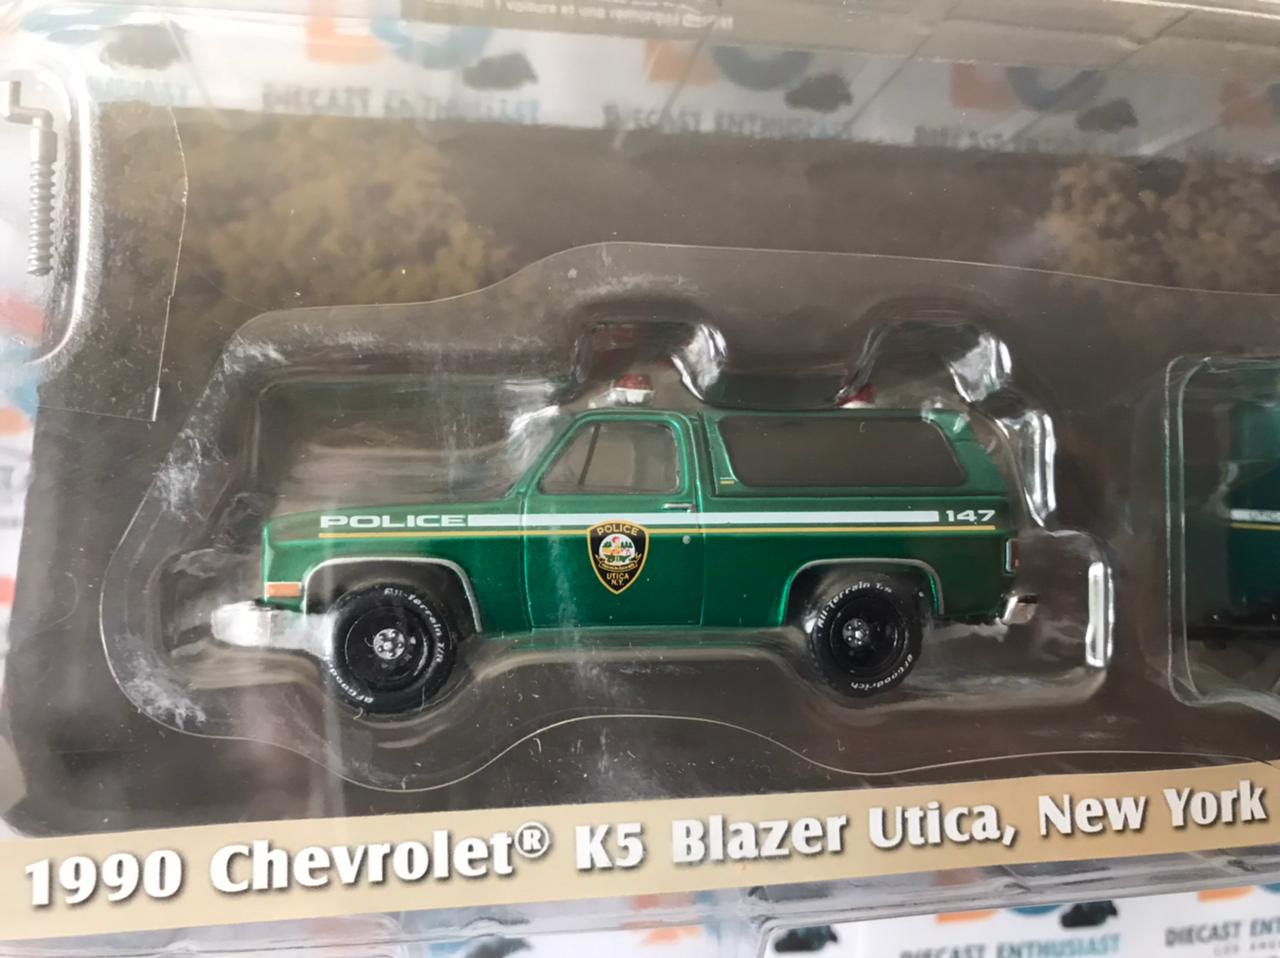 CHASE GREEN MACHINES Greenlight Hitch & Tow 1990 Chevrolet K5 Blazer Utica New York Police Small Cargo Trailer Black 1:64